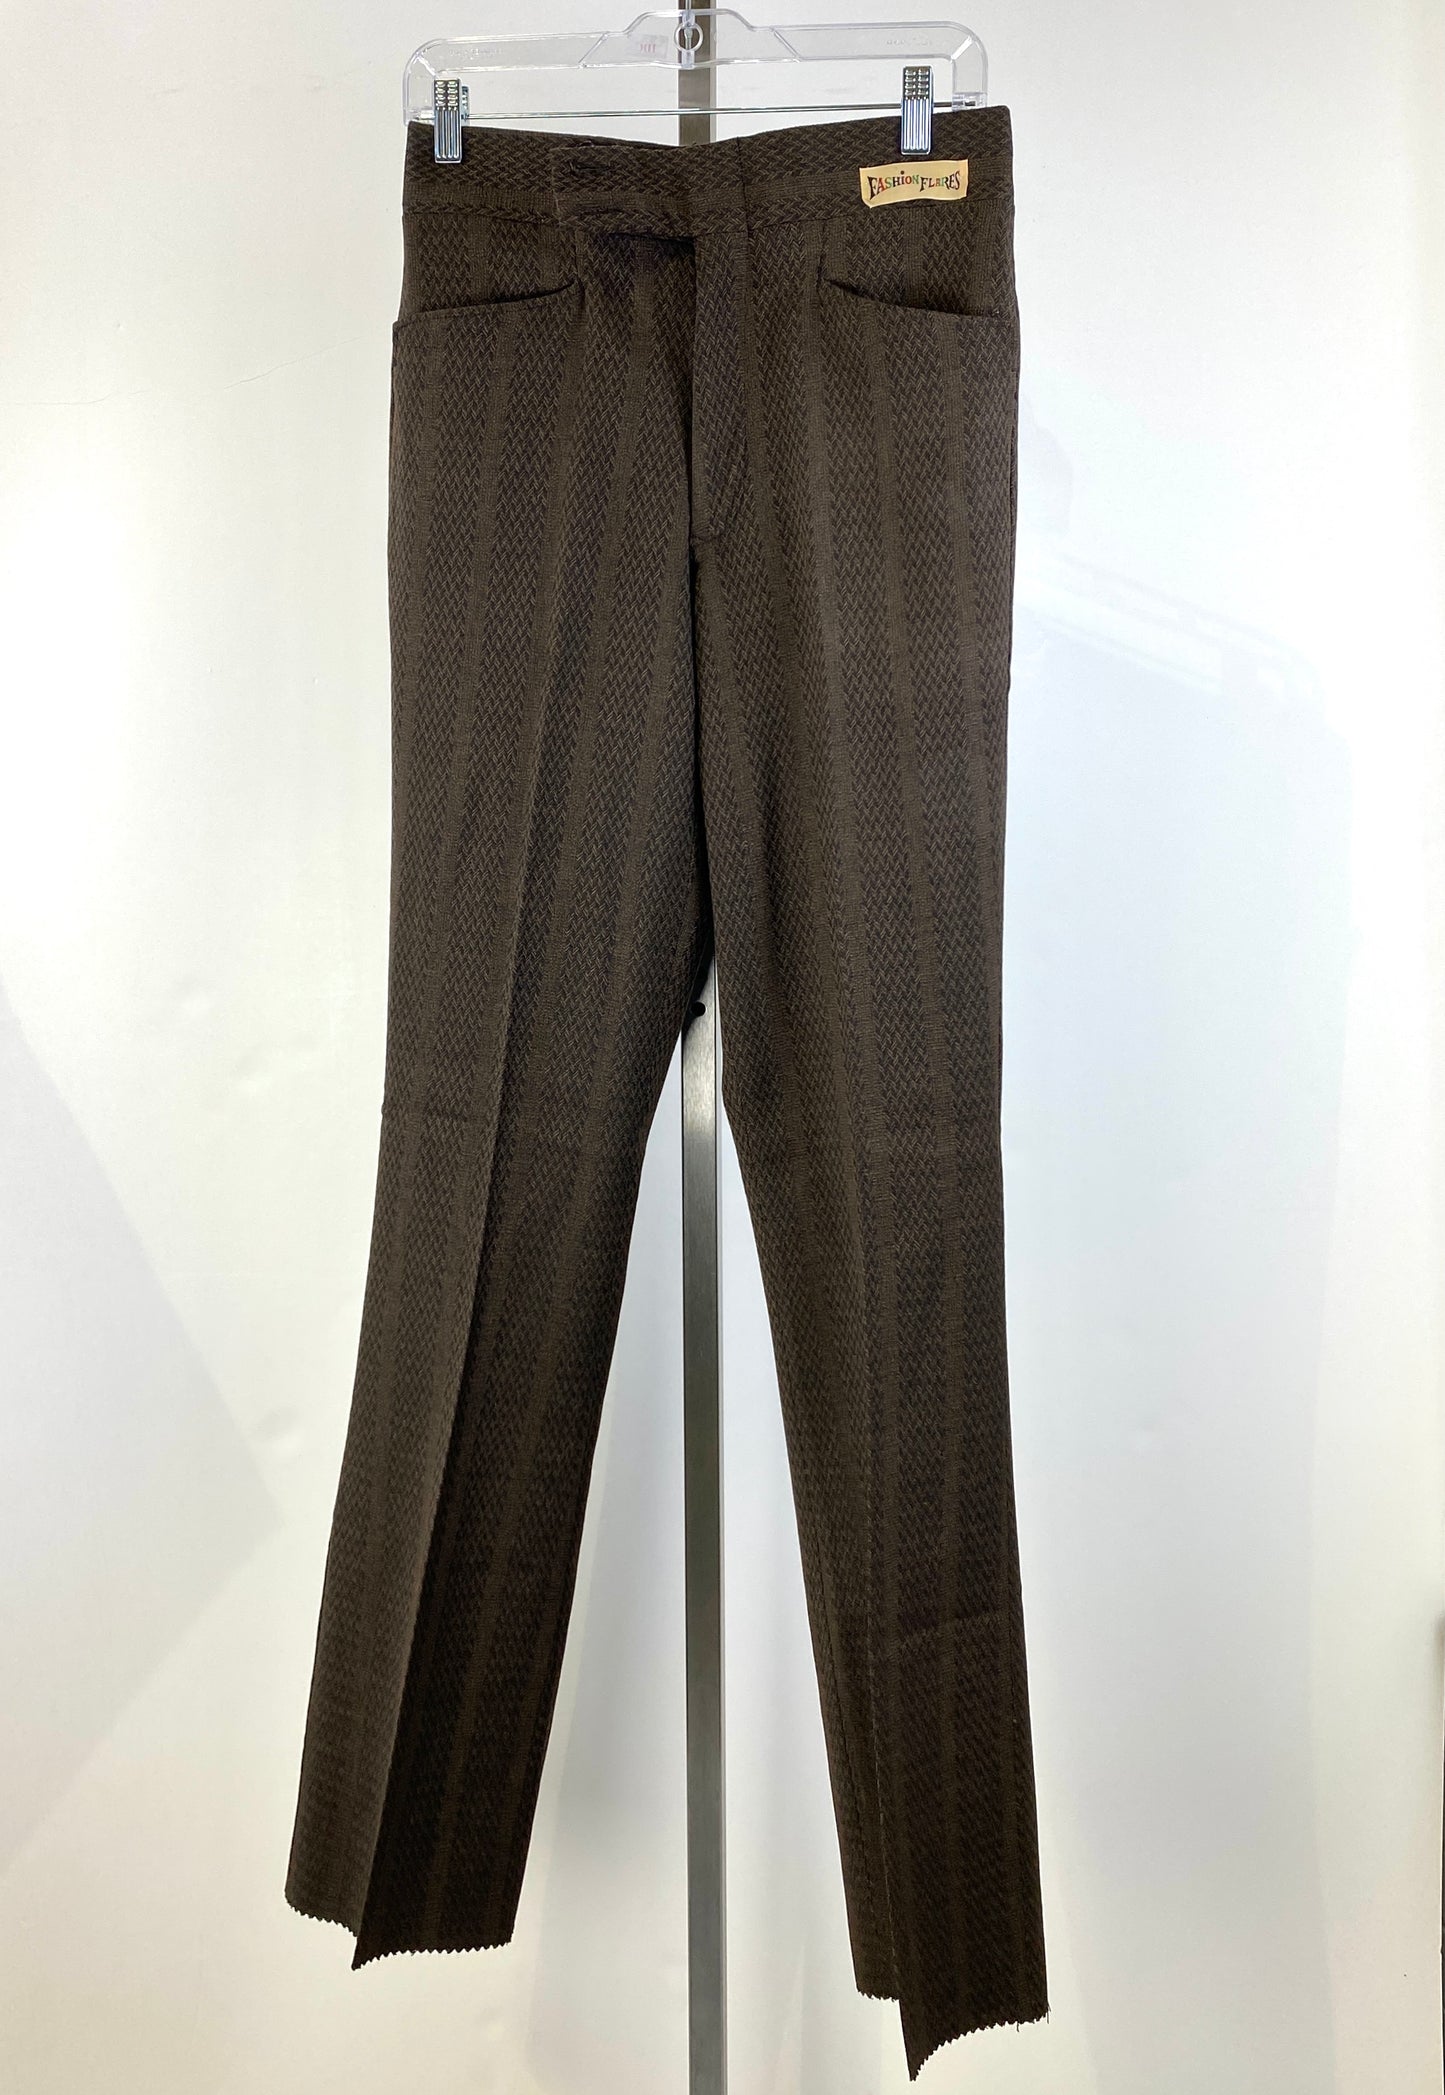 Vintage 1970s Deadstock Flared Trousers, Men's Brown Herringbone Slacks, NOS